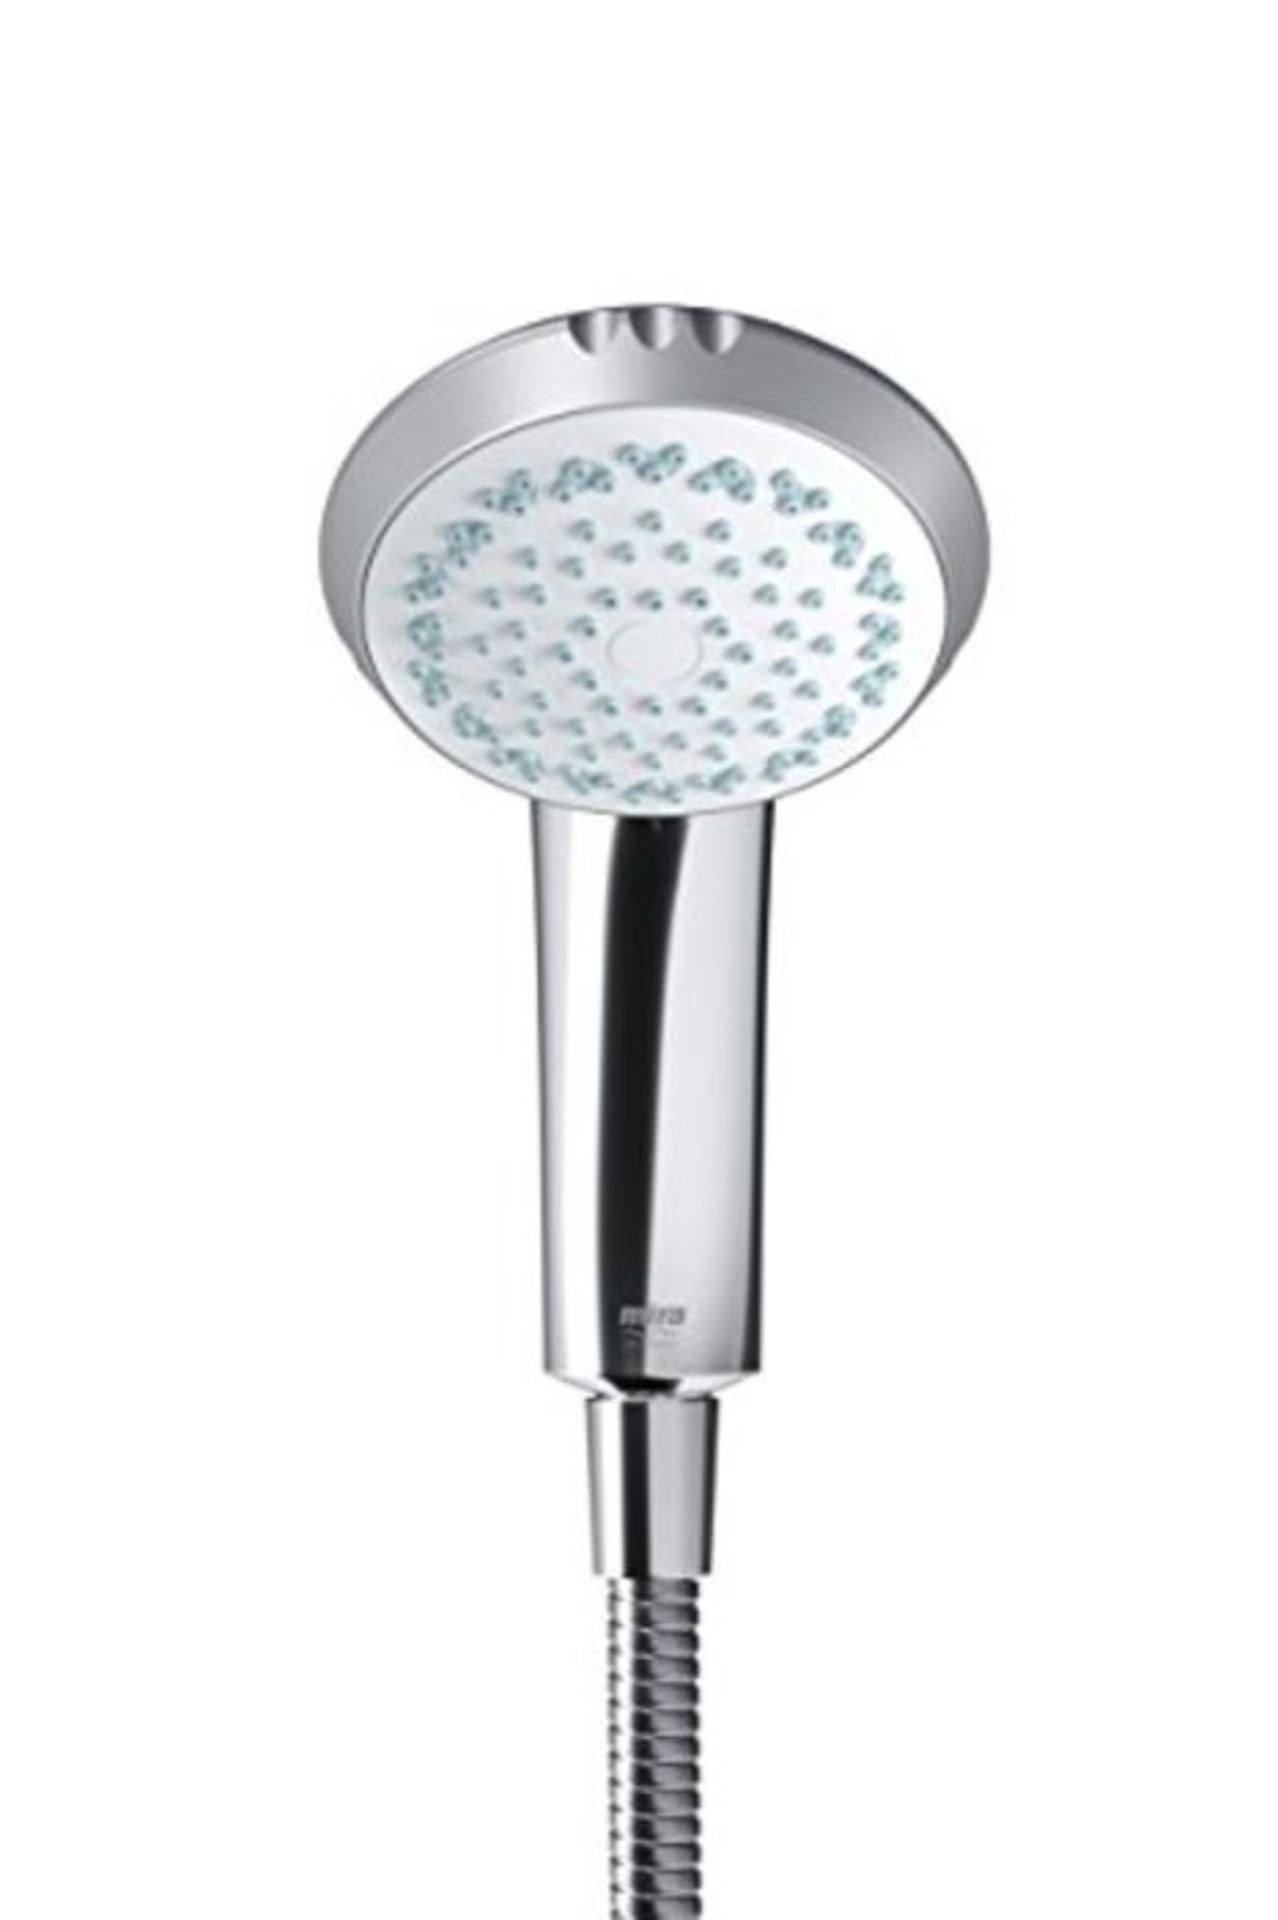 Mira Showers 2.1605.106 Response 4-Spray Shower Head - Chrome (1-Piece)